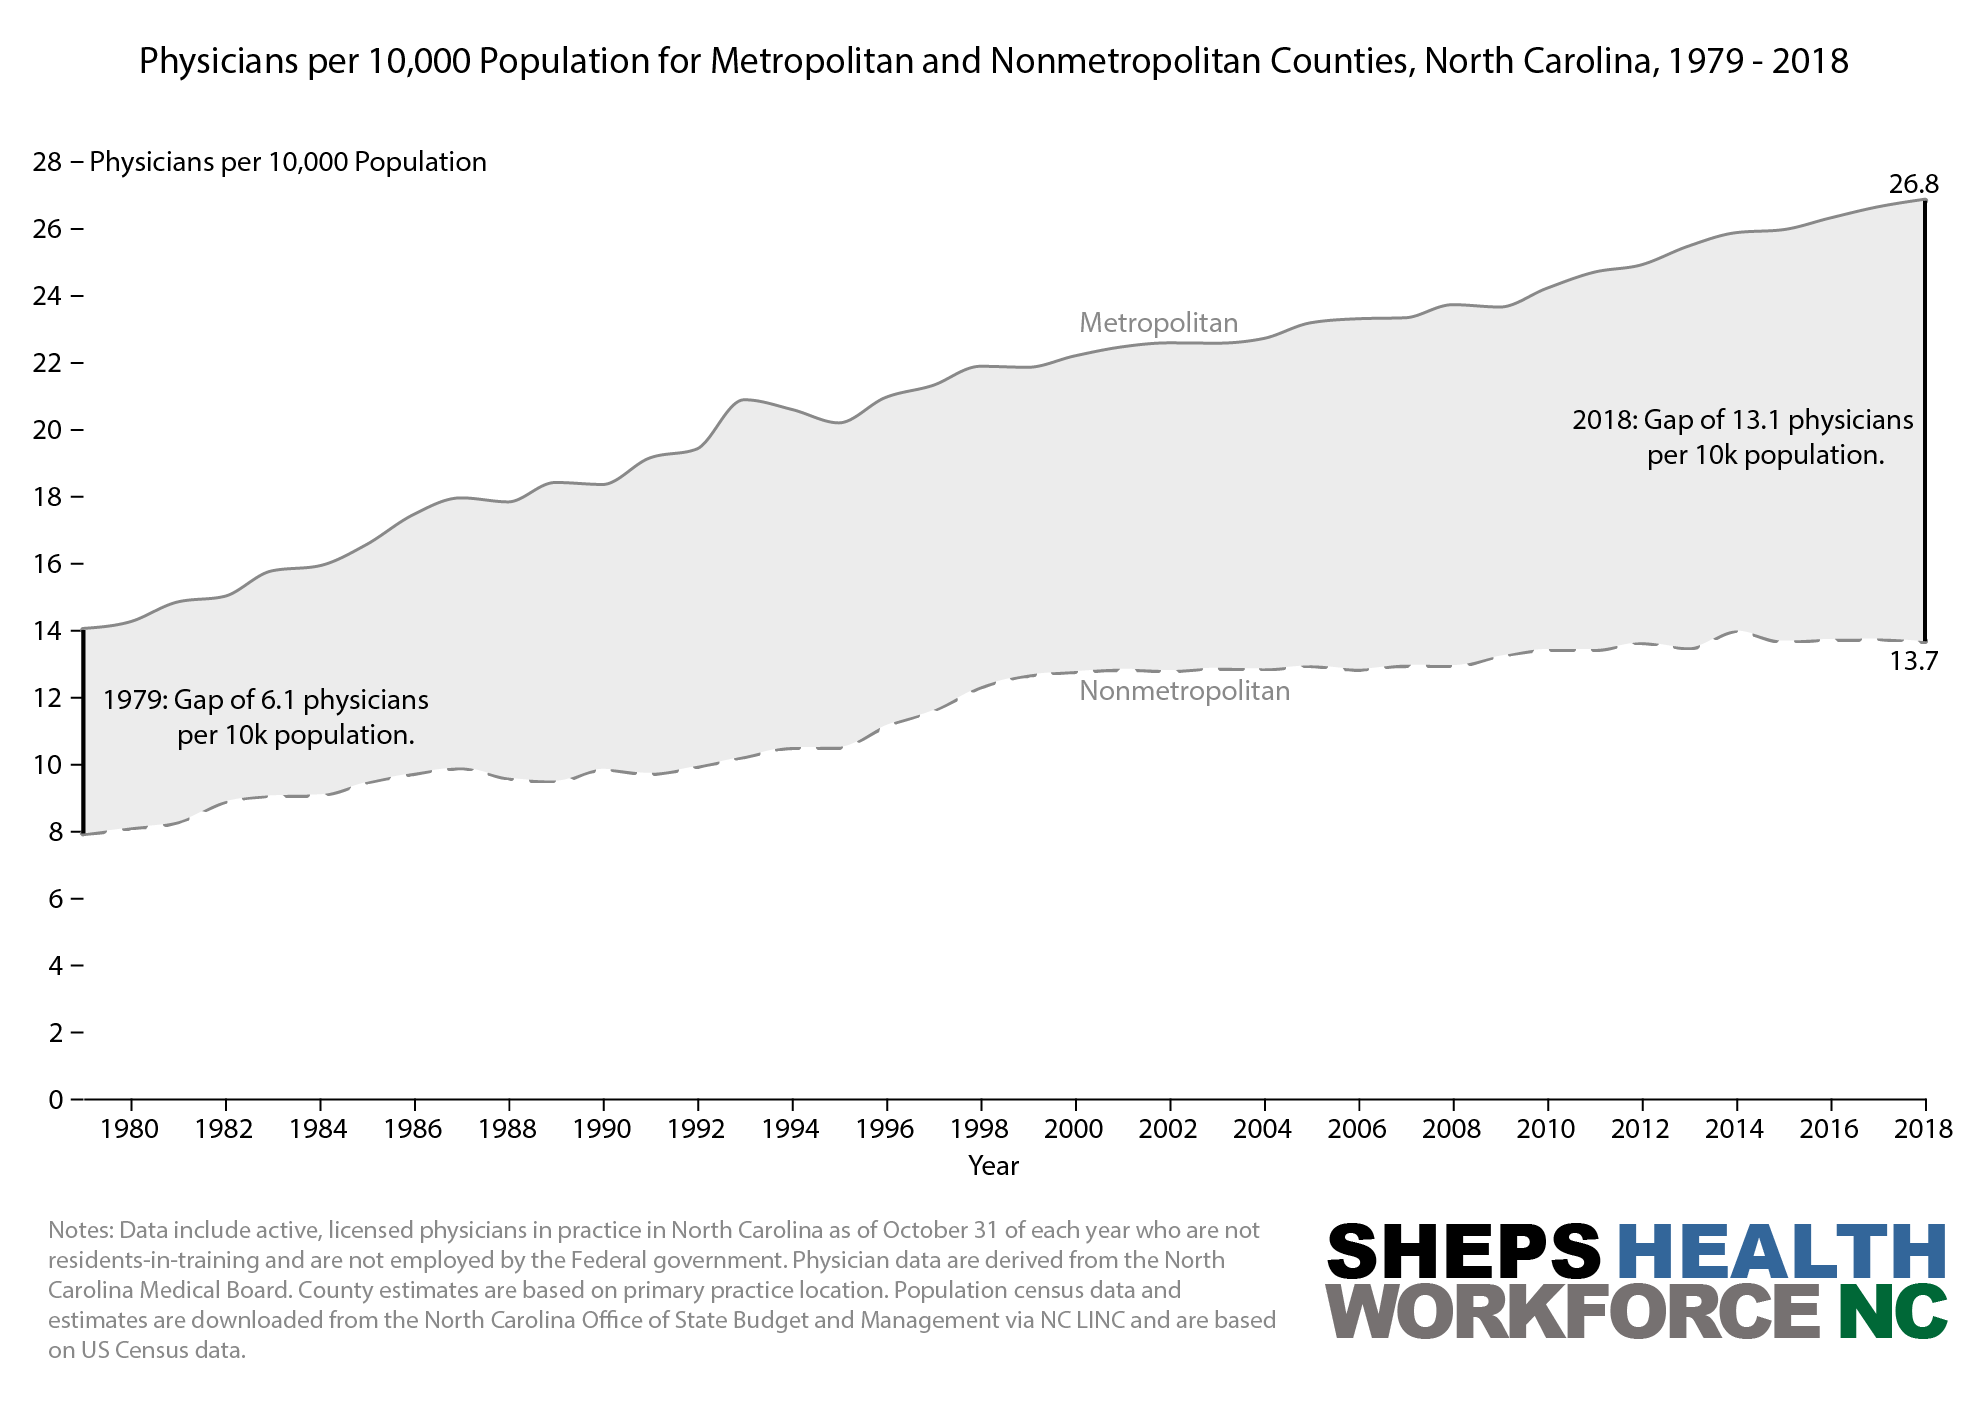 Physicians per 10,000 Population, Metropolitan vs Non-Metropolitan Counties, 1979 - 2018, North Carolina.